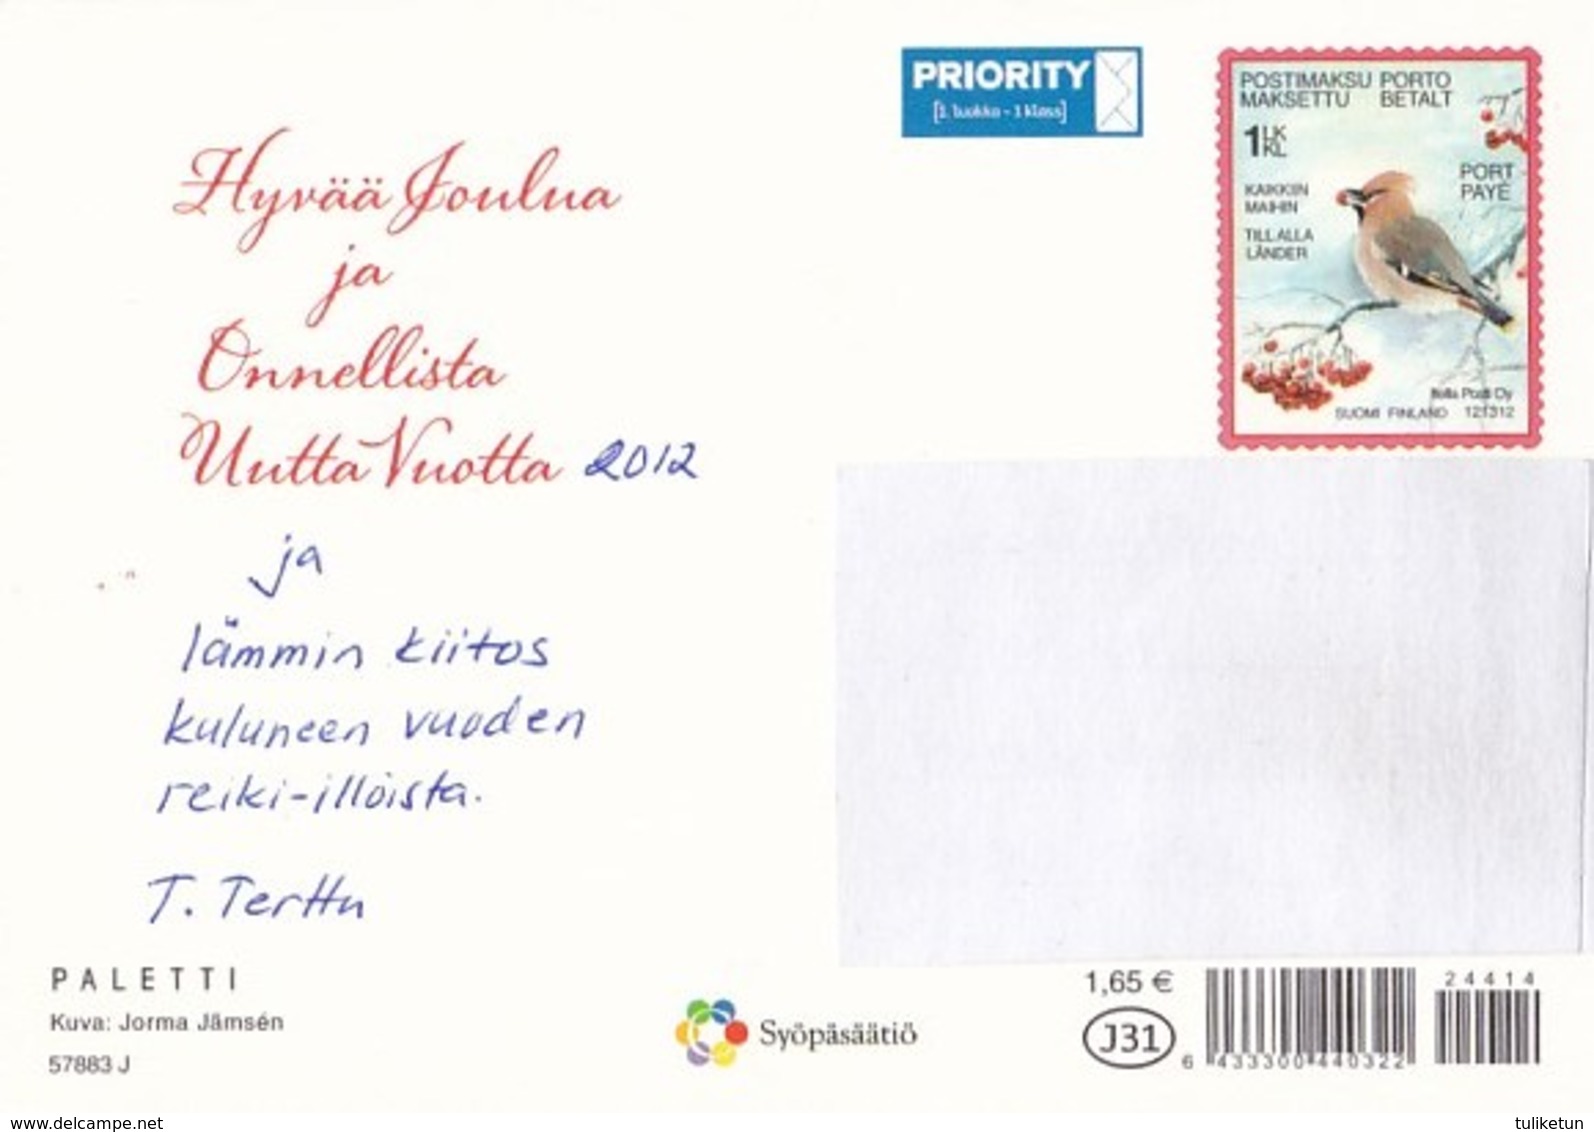 Postal Stationery - Bird - Candle Lighting - Apples - Cancer Foundation - Suomi Finland - Postage Paid - Interi Postali